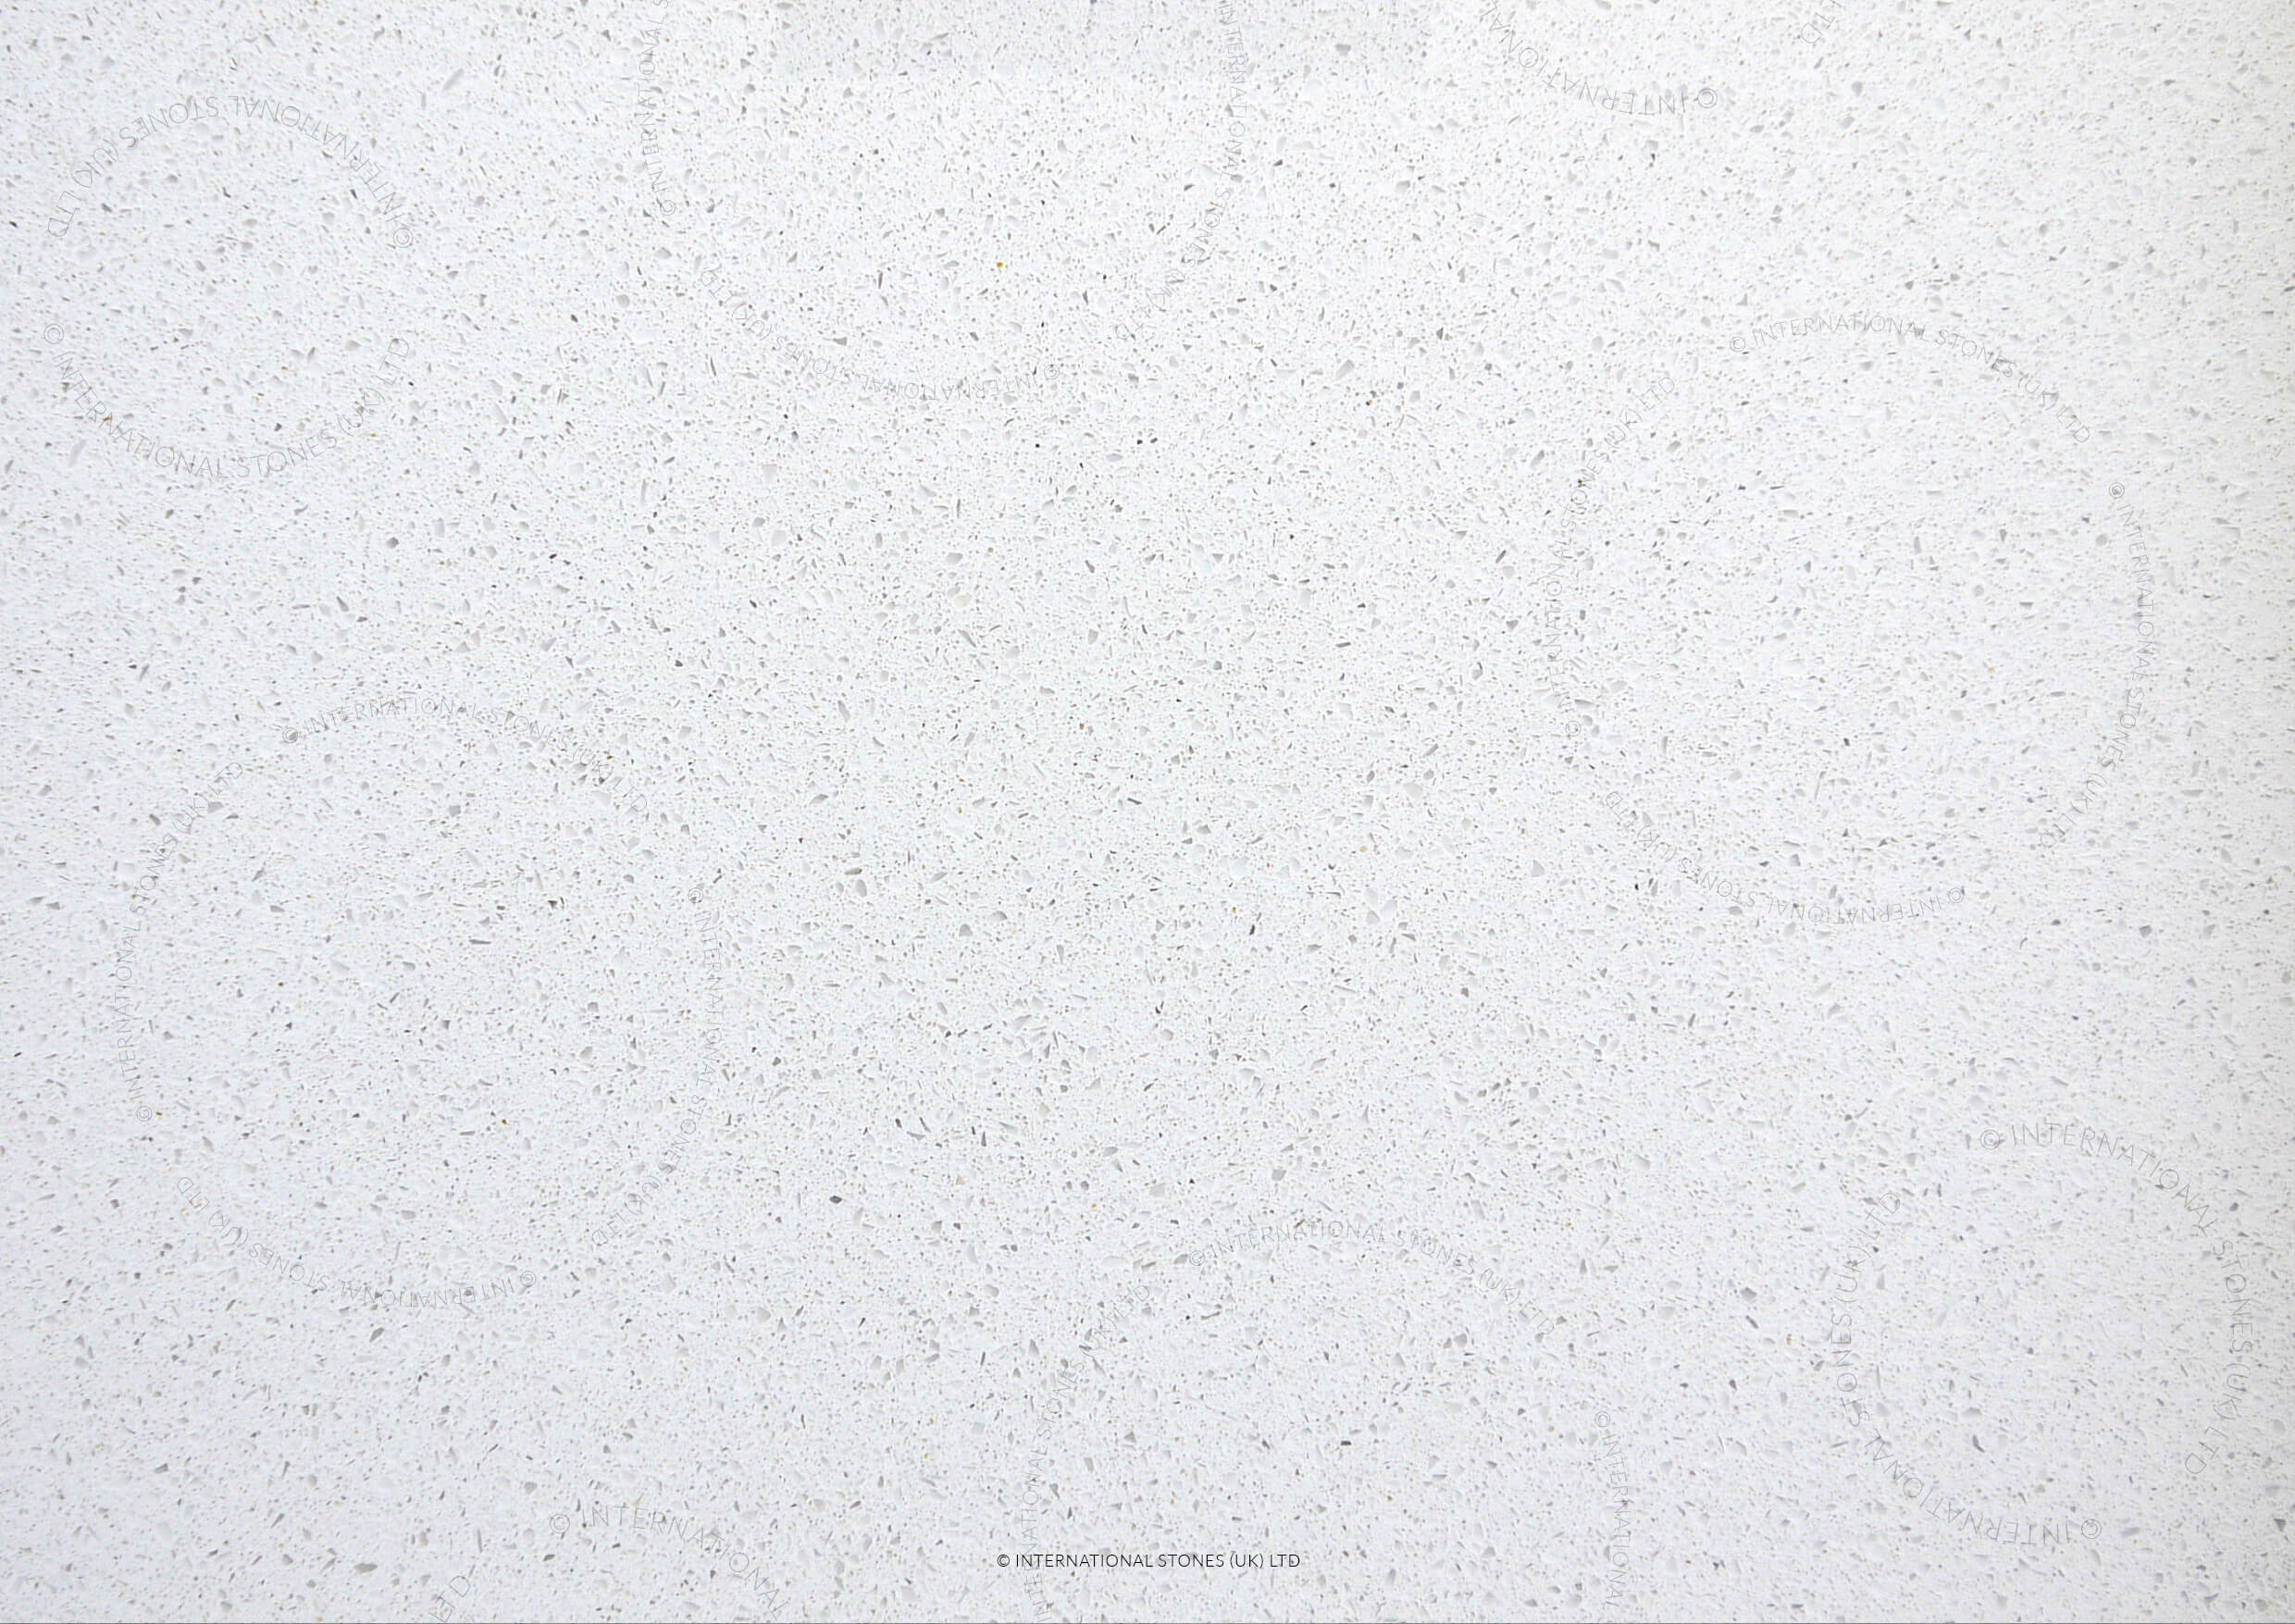 International Stone IQ Blanco Maple - penrith - Whitehaven